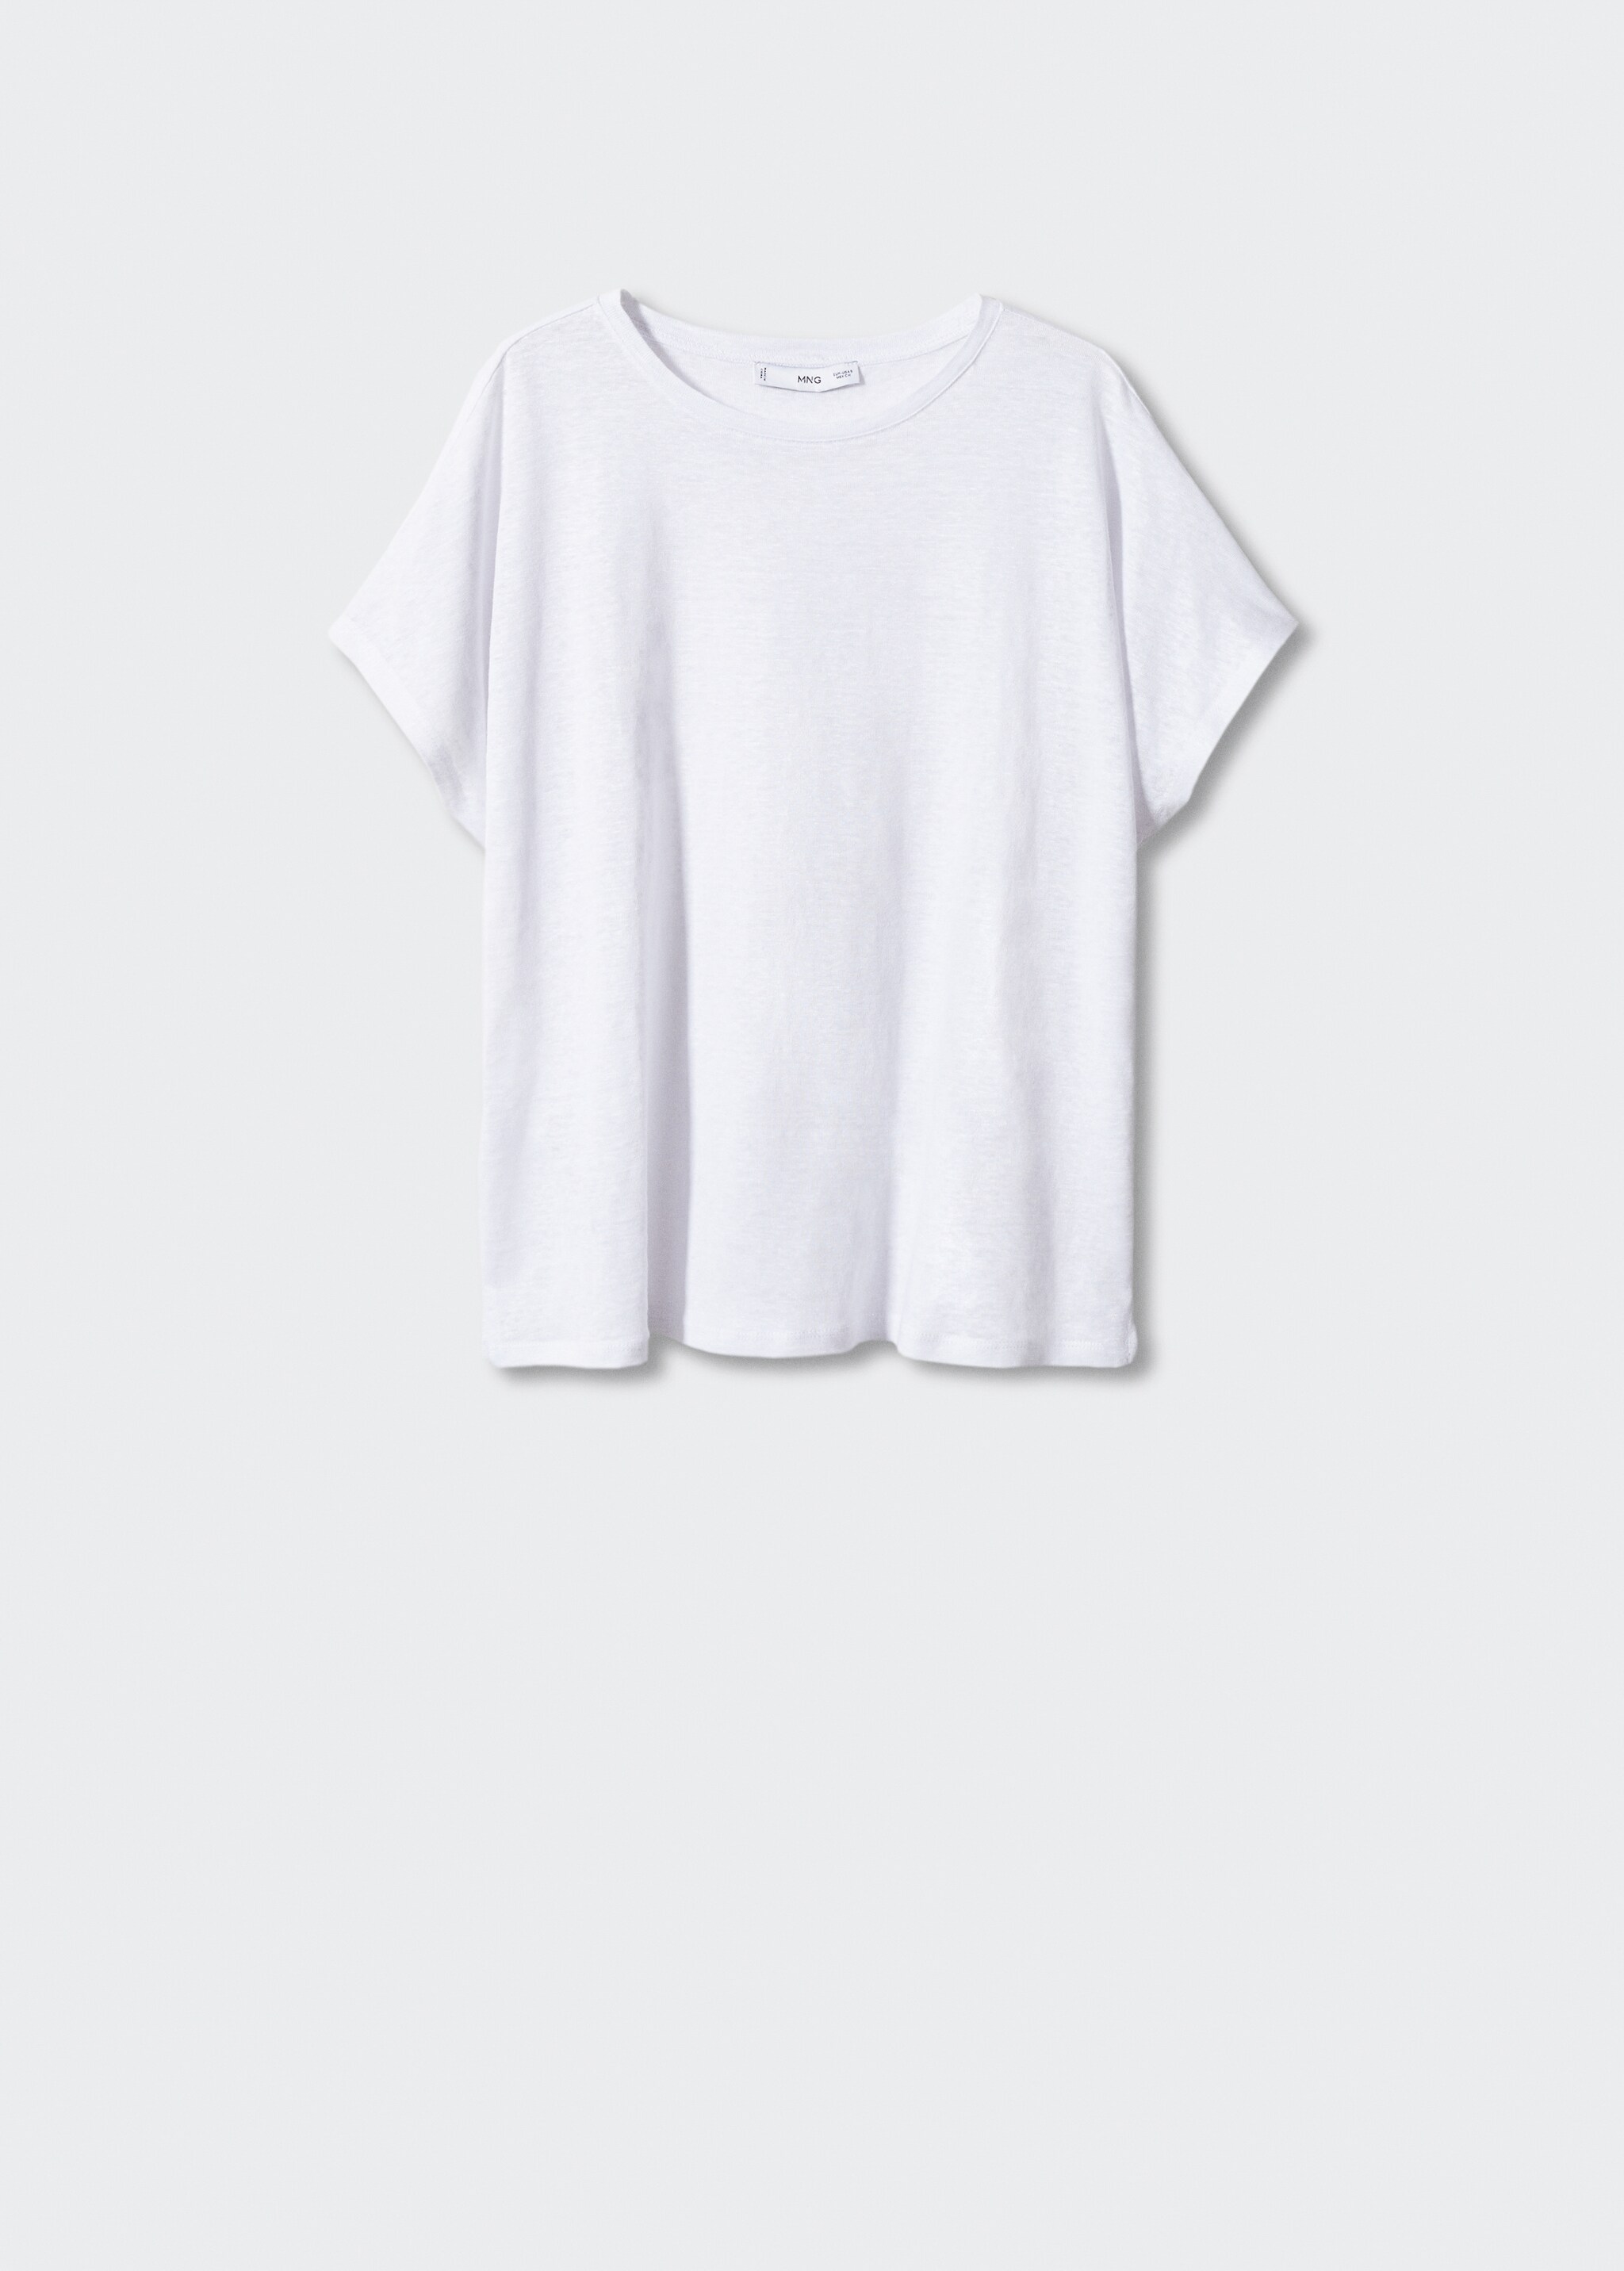 Camiseta lino oversize - Artículo sin modelo